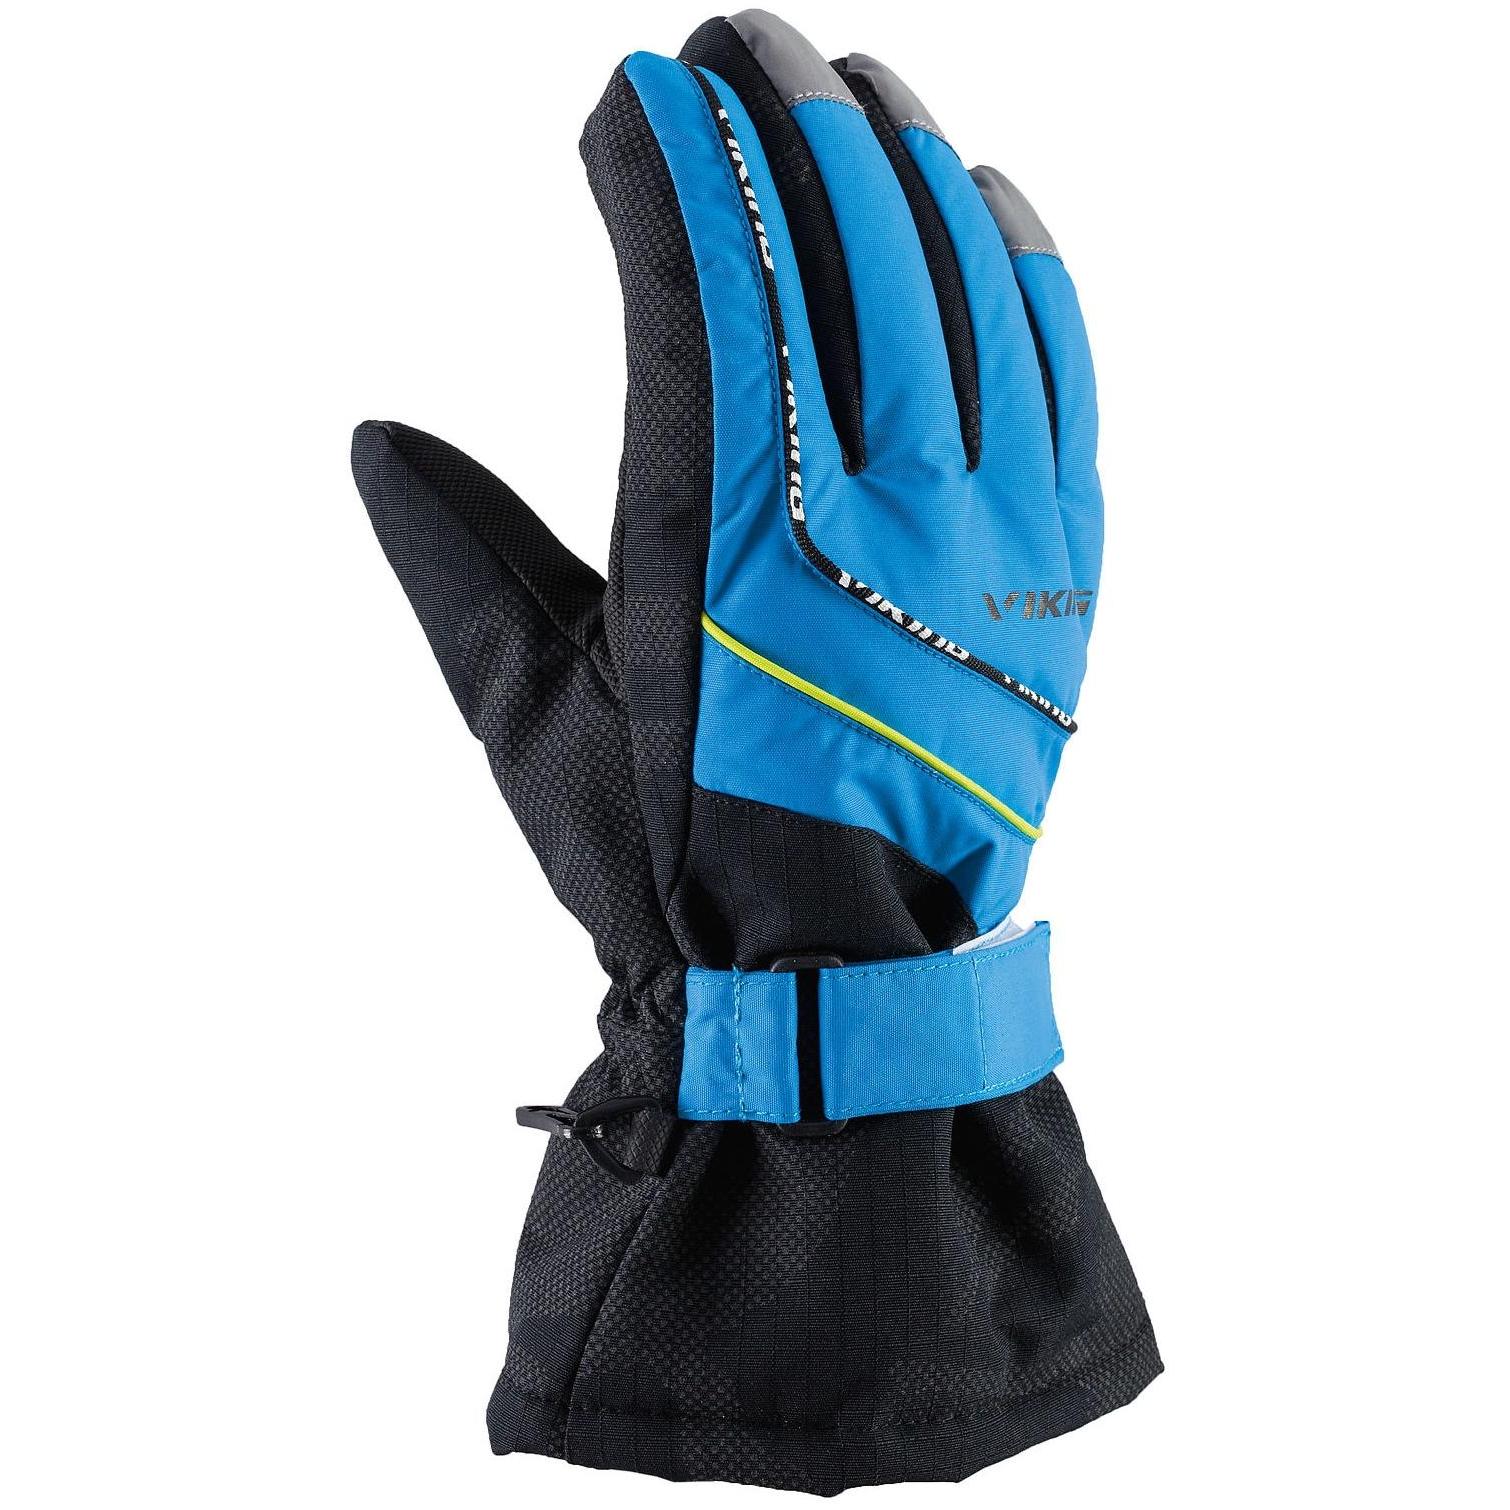 Перчатки Viking 2020-21 Mate Blue (Inch (Дюйм):5) перчатки горные viking 2020 21 glade blue inch дюйм 2